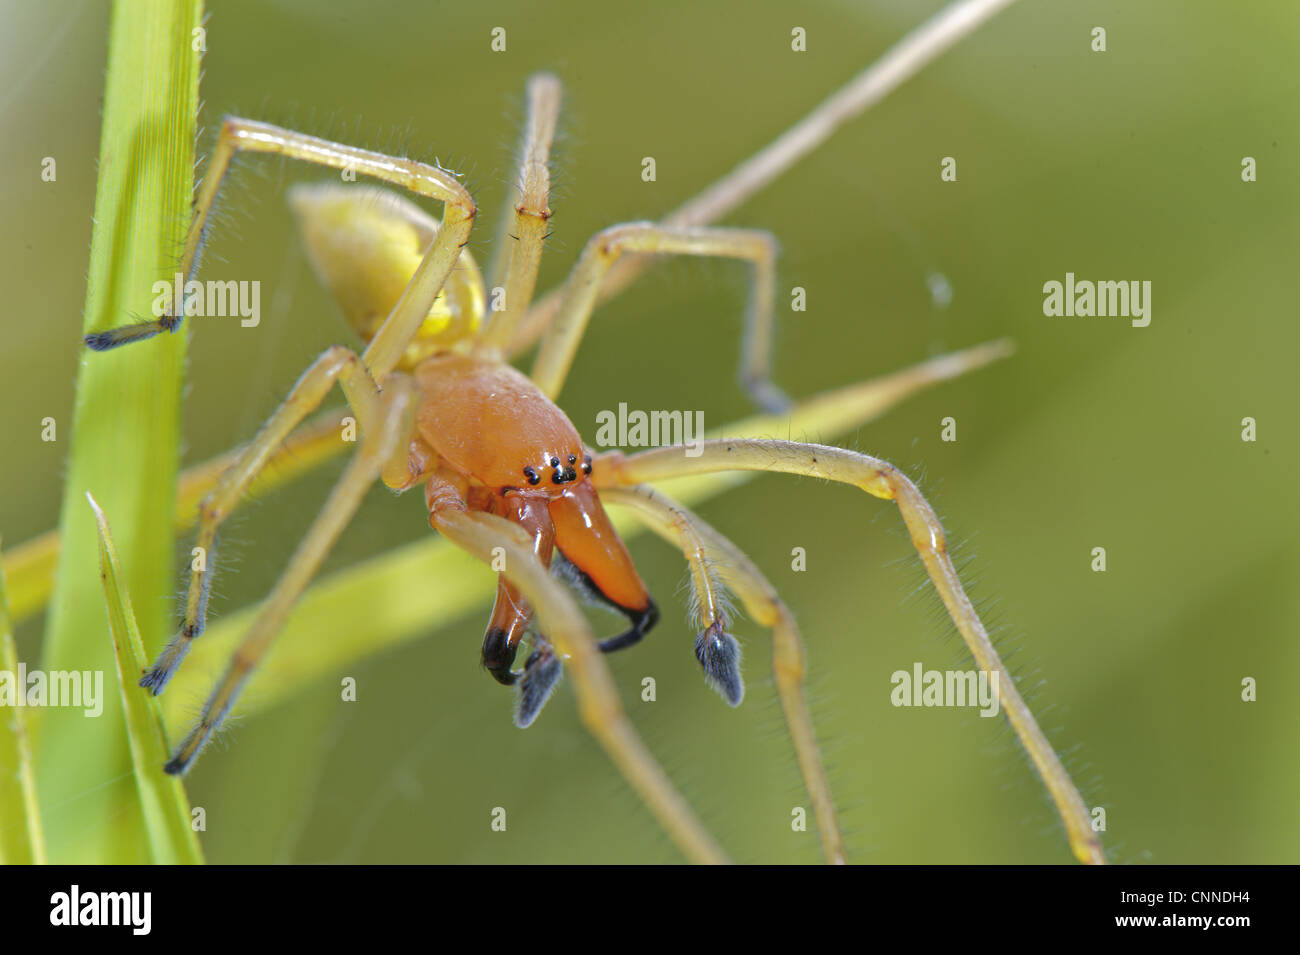 Yellow Sac Spider (Cheiracanthium punctorium) adult male, defending nest, Italy Stock Photo